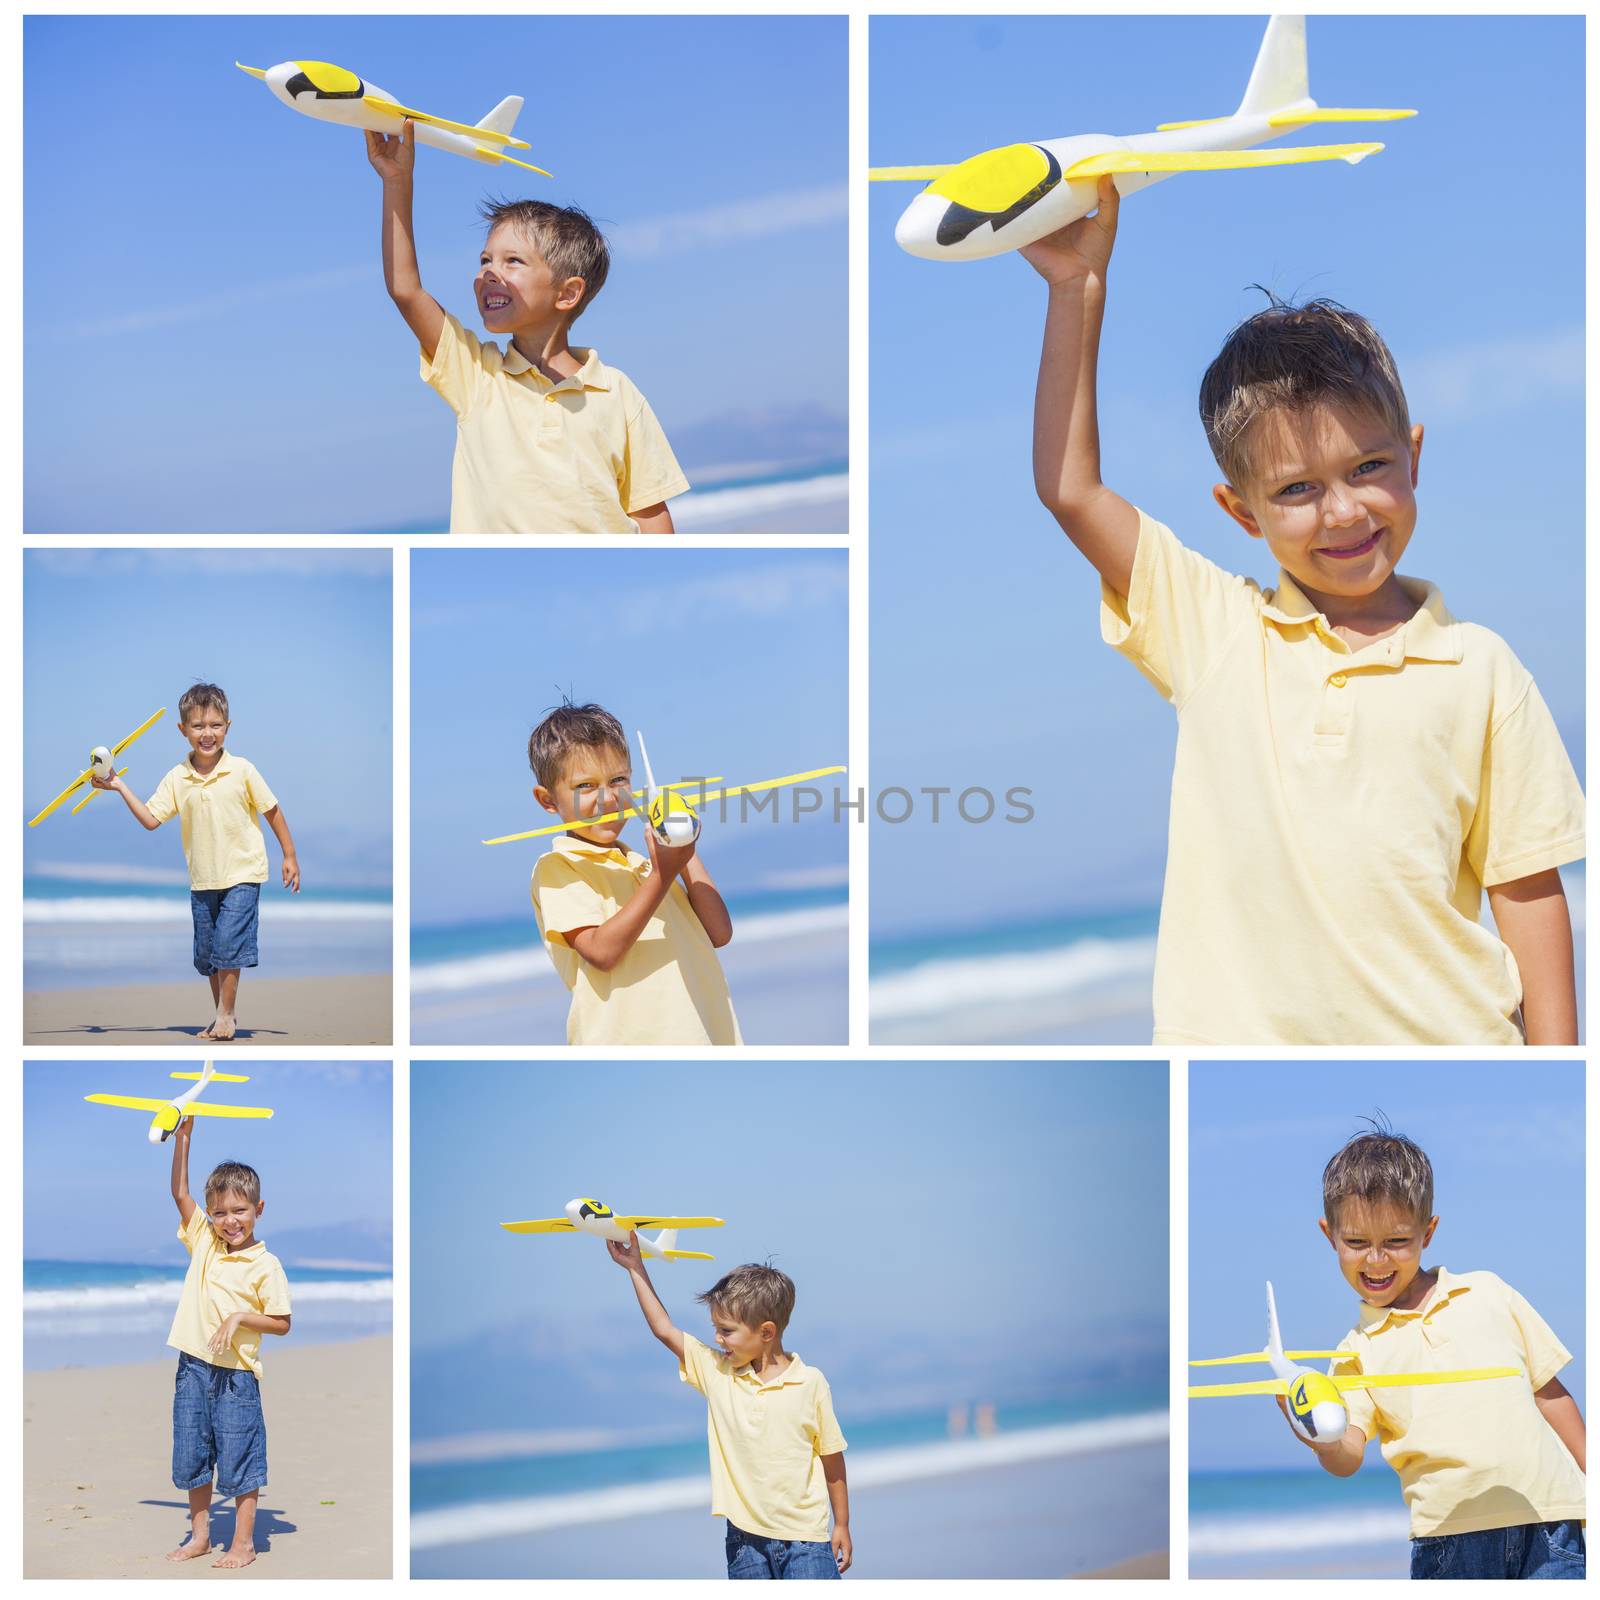 Collage of images beach kid boy kite flying outdoor coast ocean